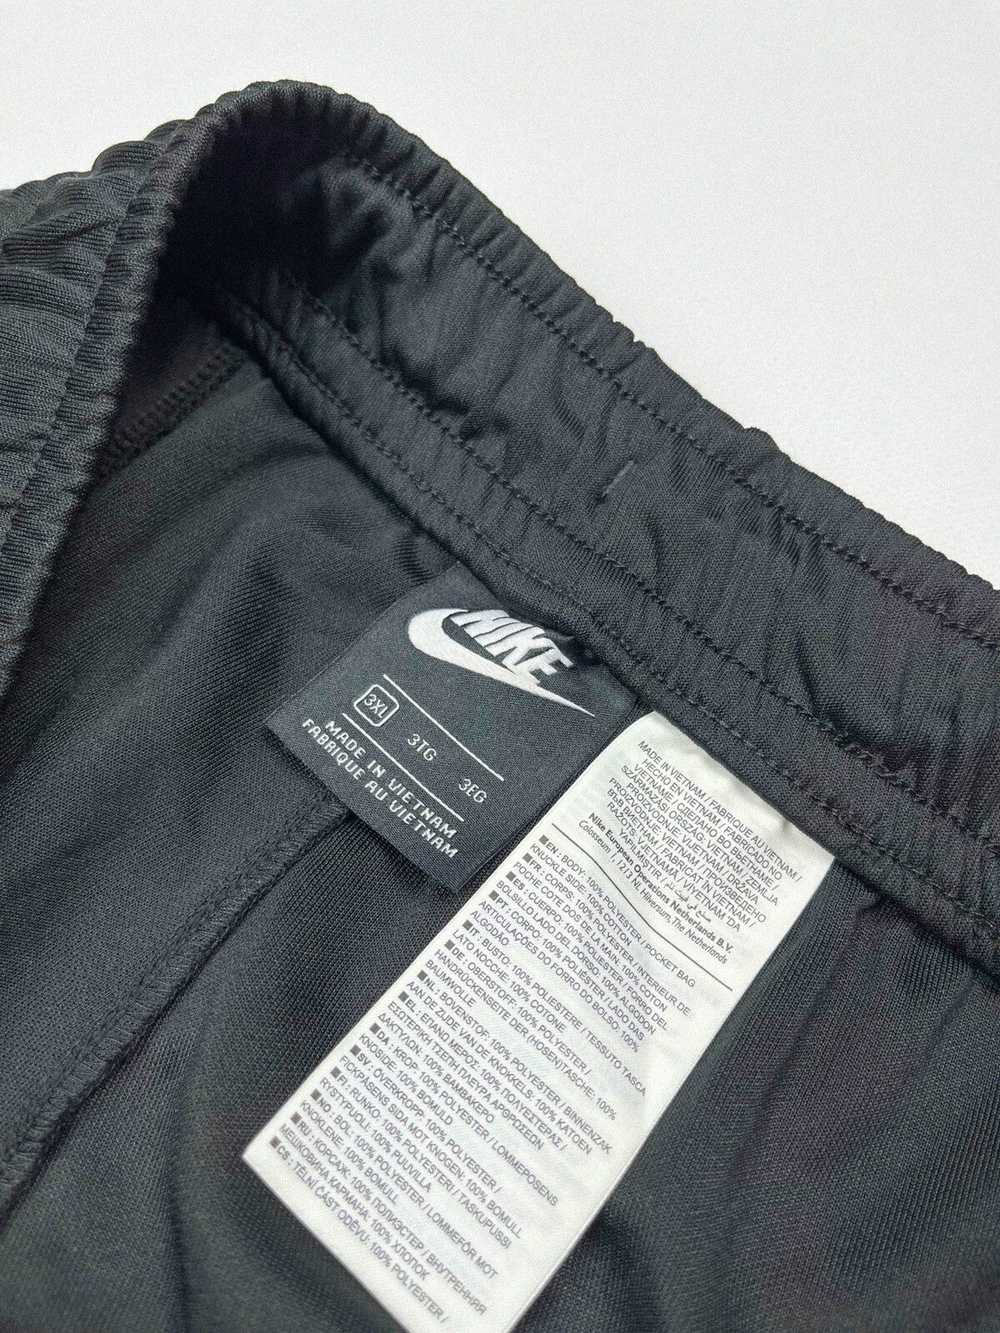 Nike Nike Trackpants Full Side Snap Pants 3XL - image 4